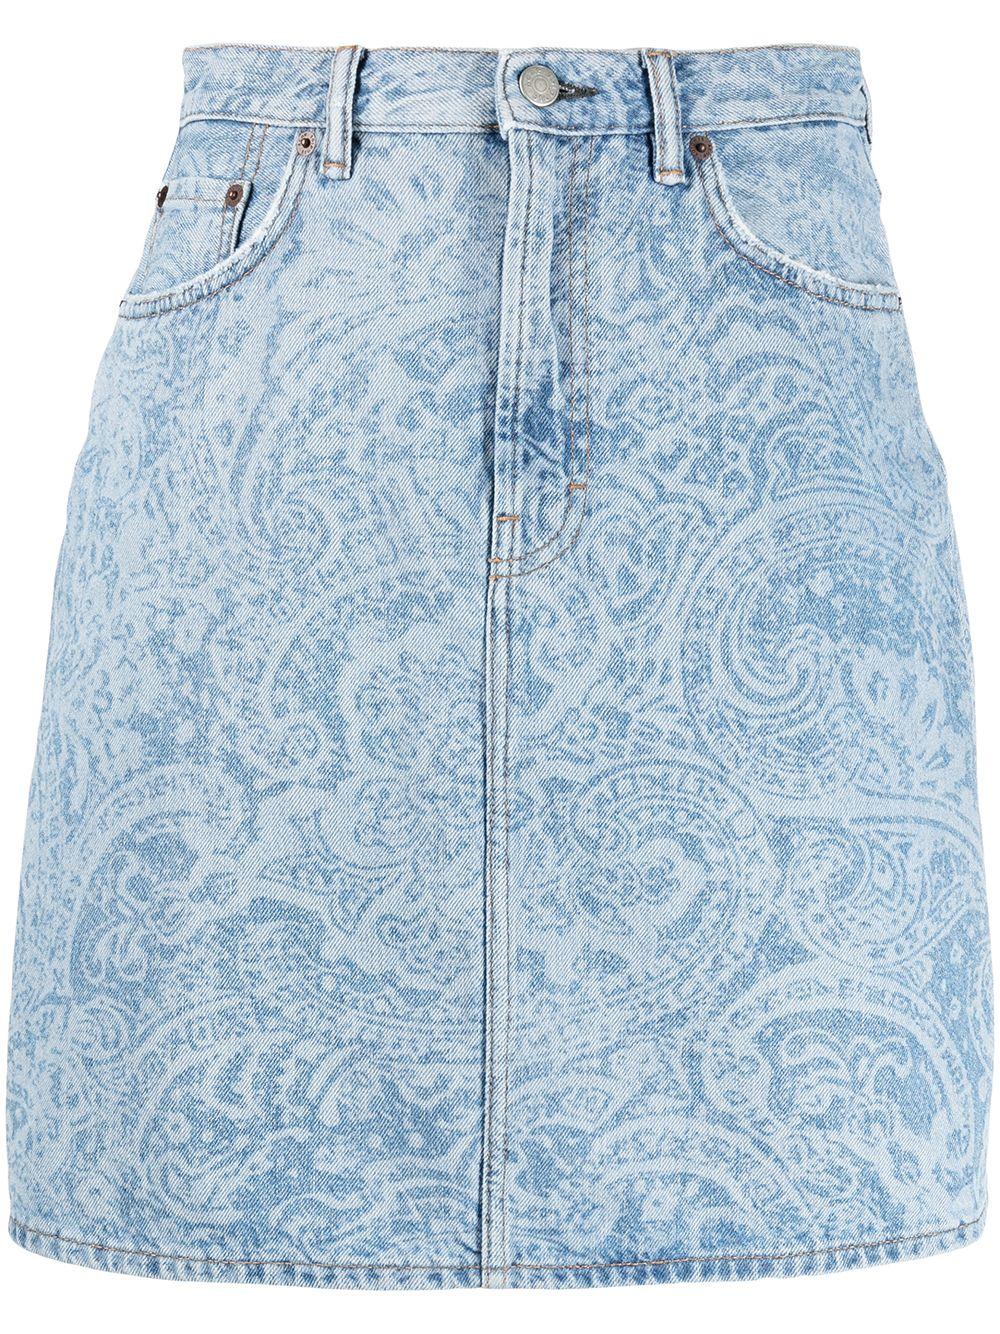 Acne Studios Paisley Print Denim Skirt in Blue - Lyst